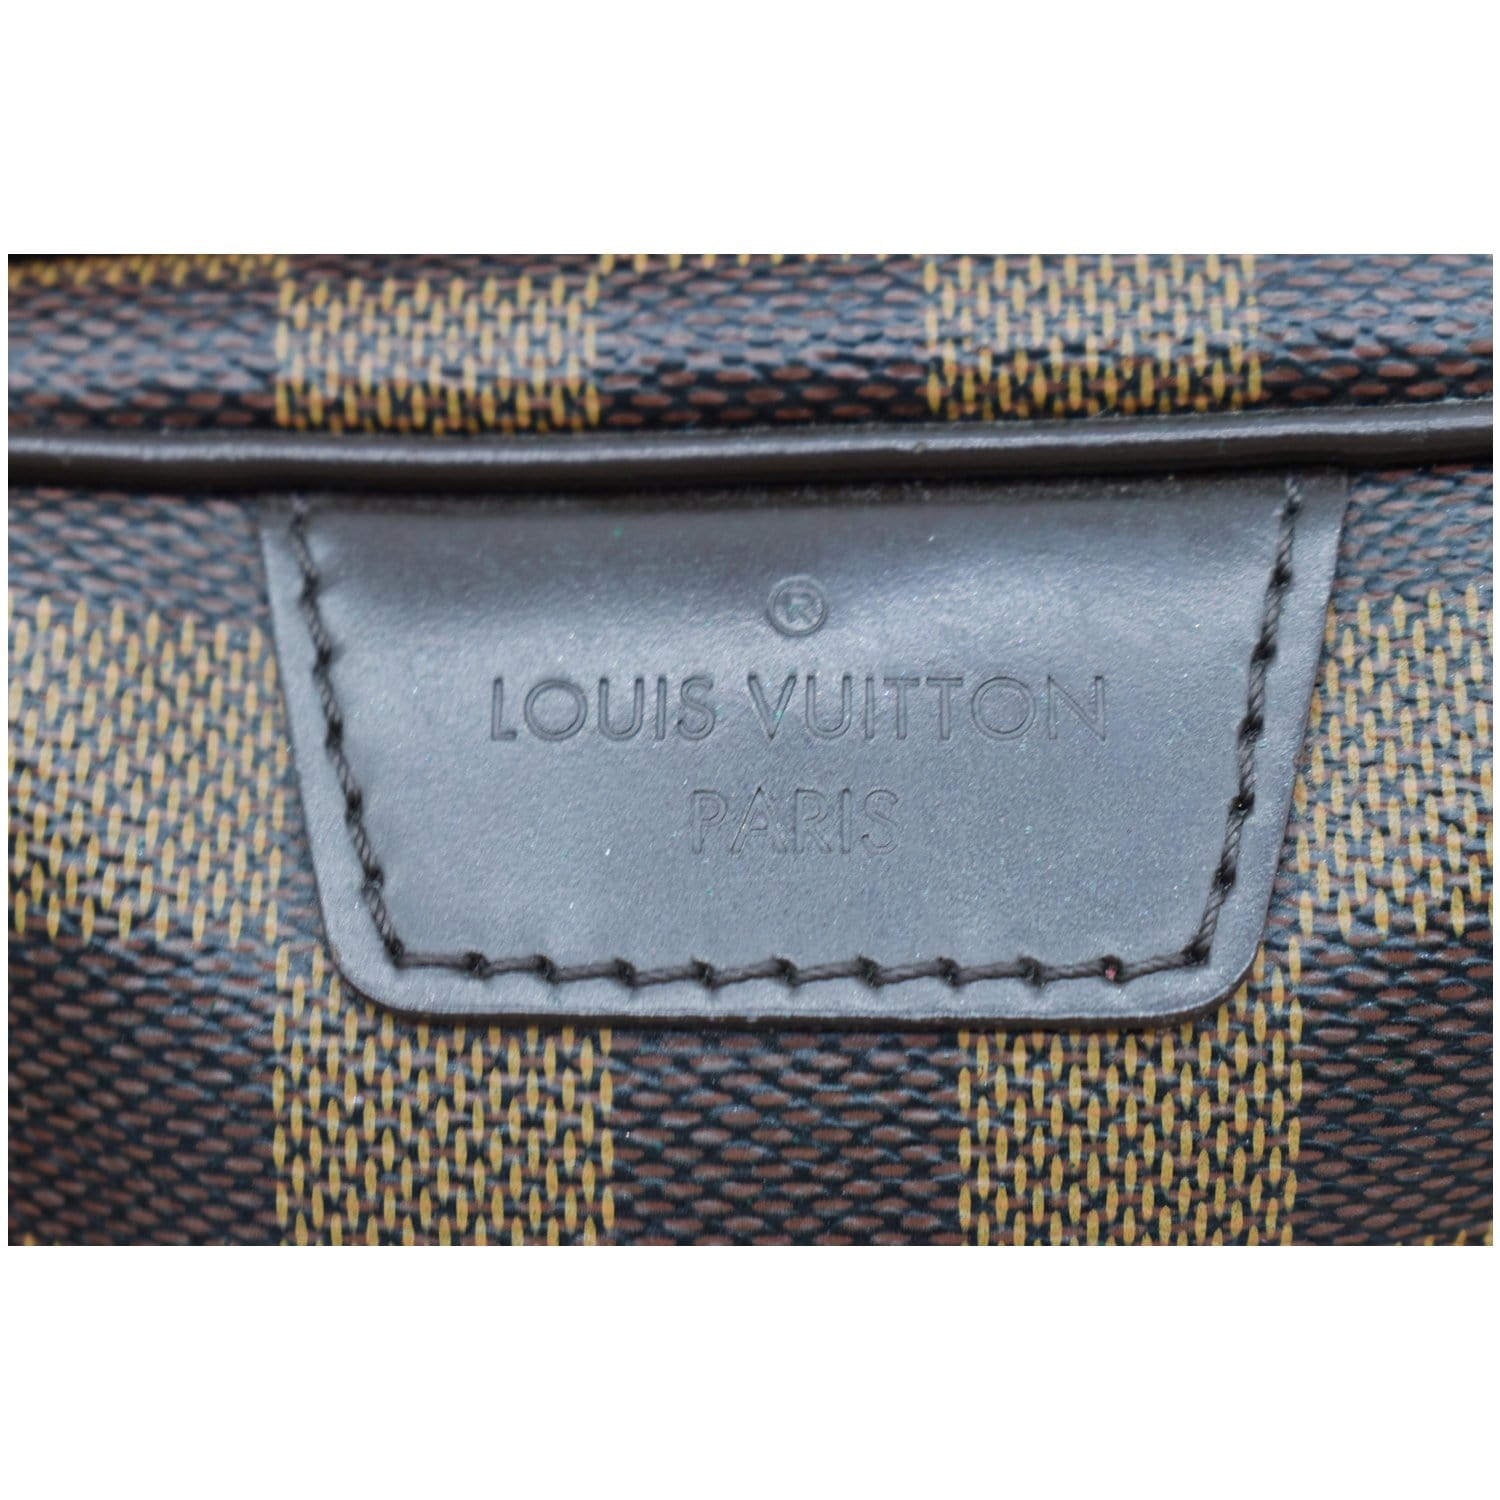 Rivington PM Damier Ebene – Keeks Designer Handbags